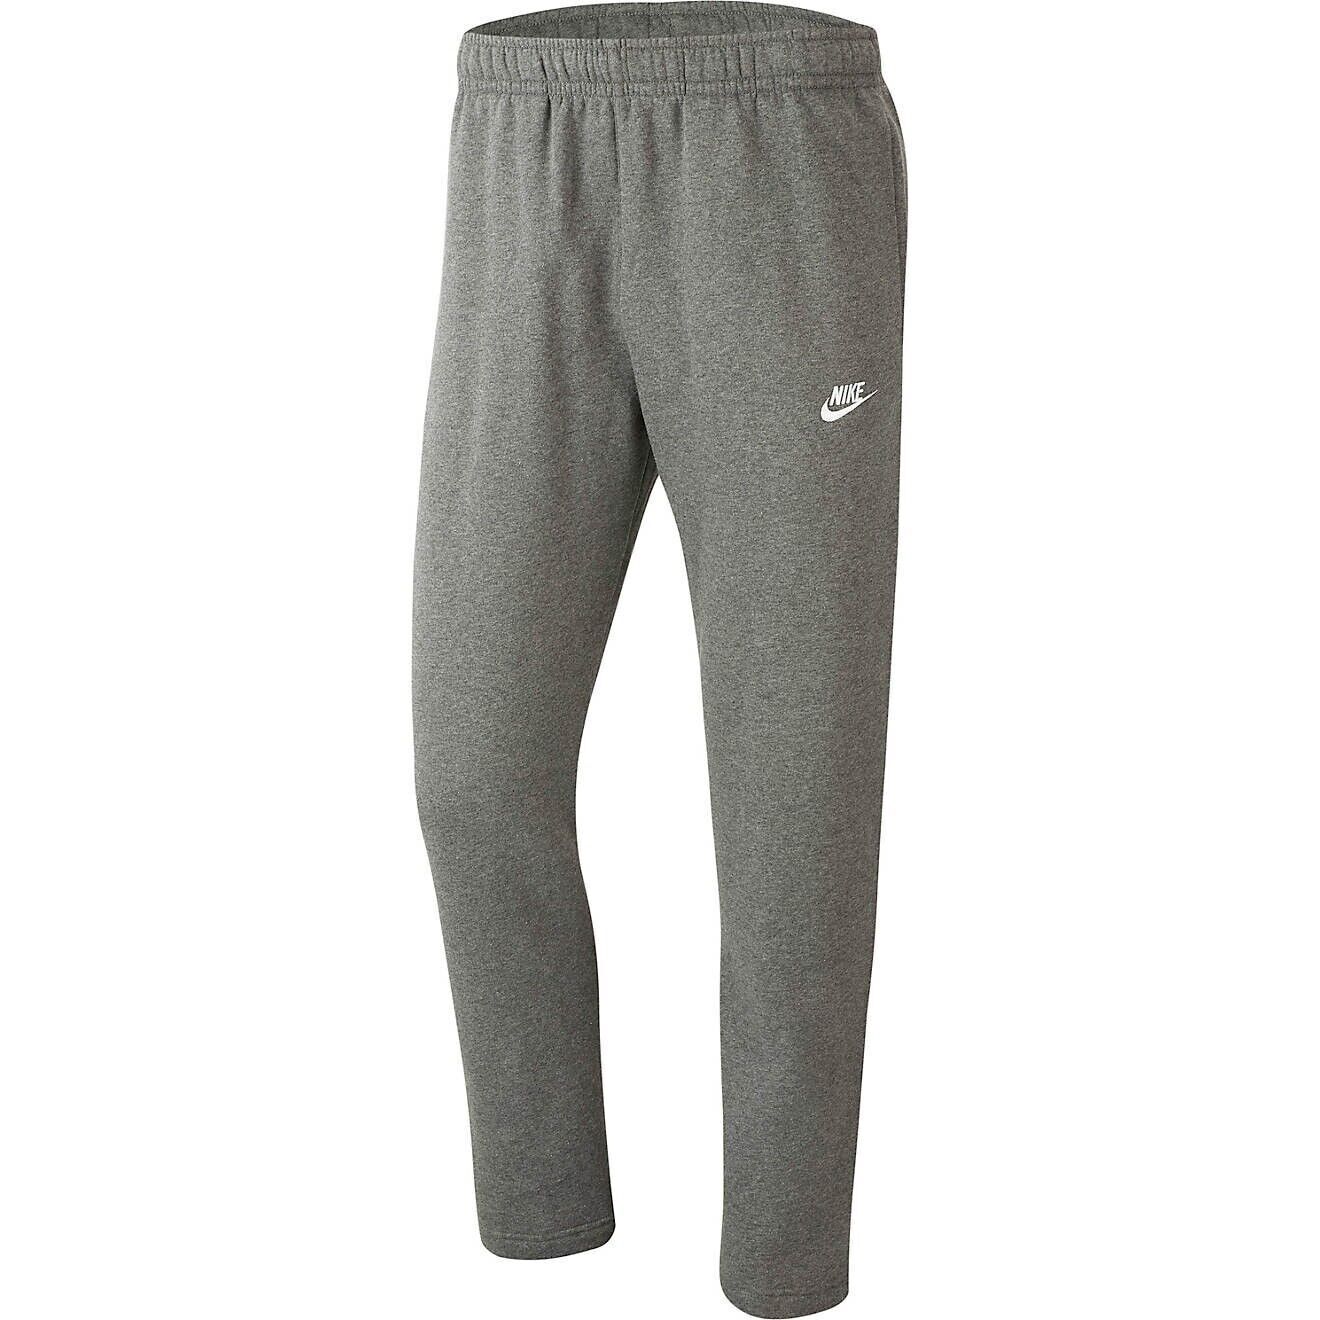 Nike Men's Nike Sportswear Charcoal Heather/Anthracite/White Club Fleece Sweatpants